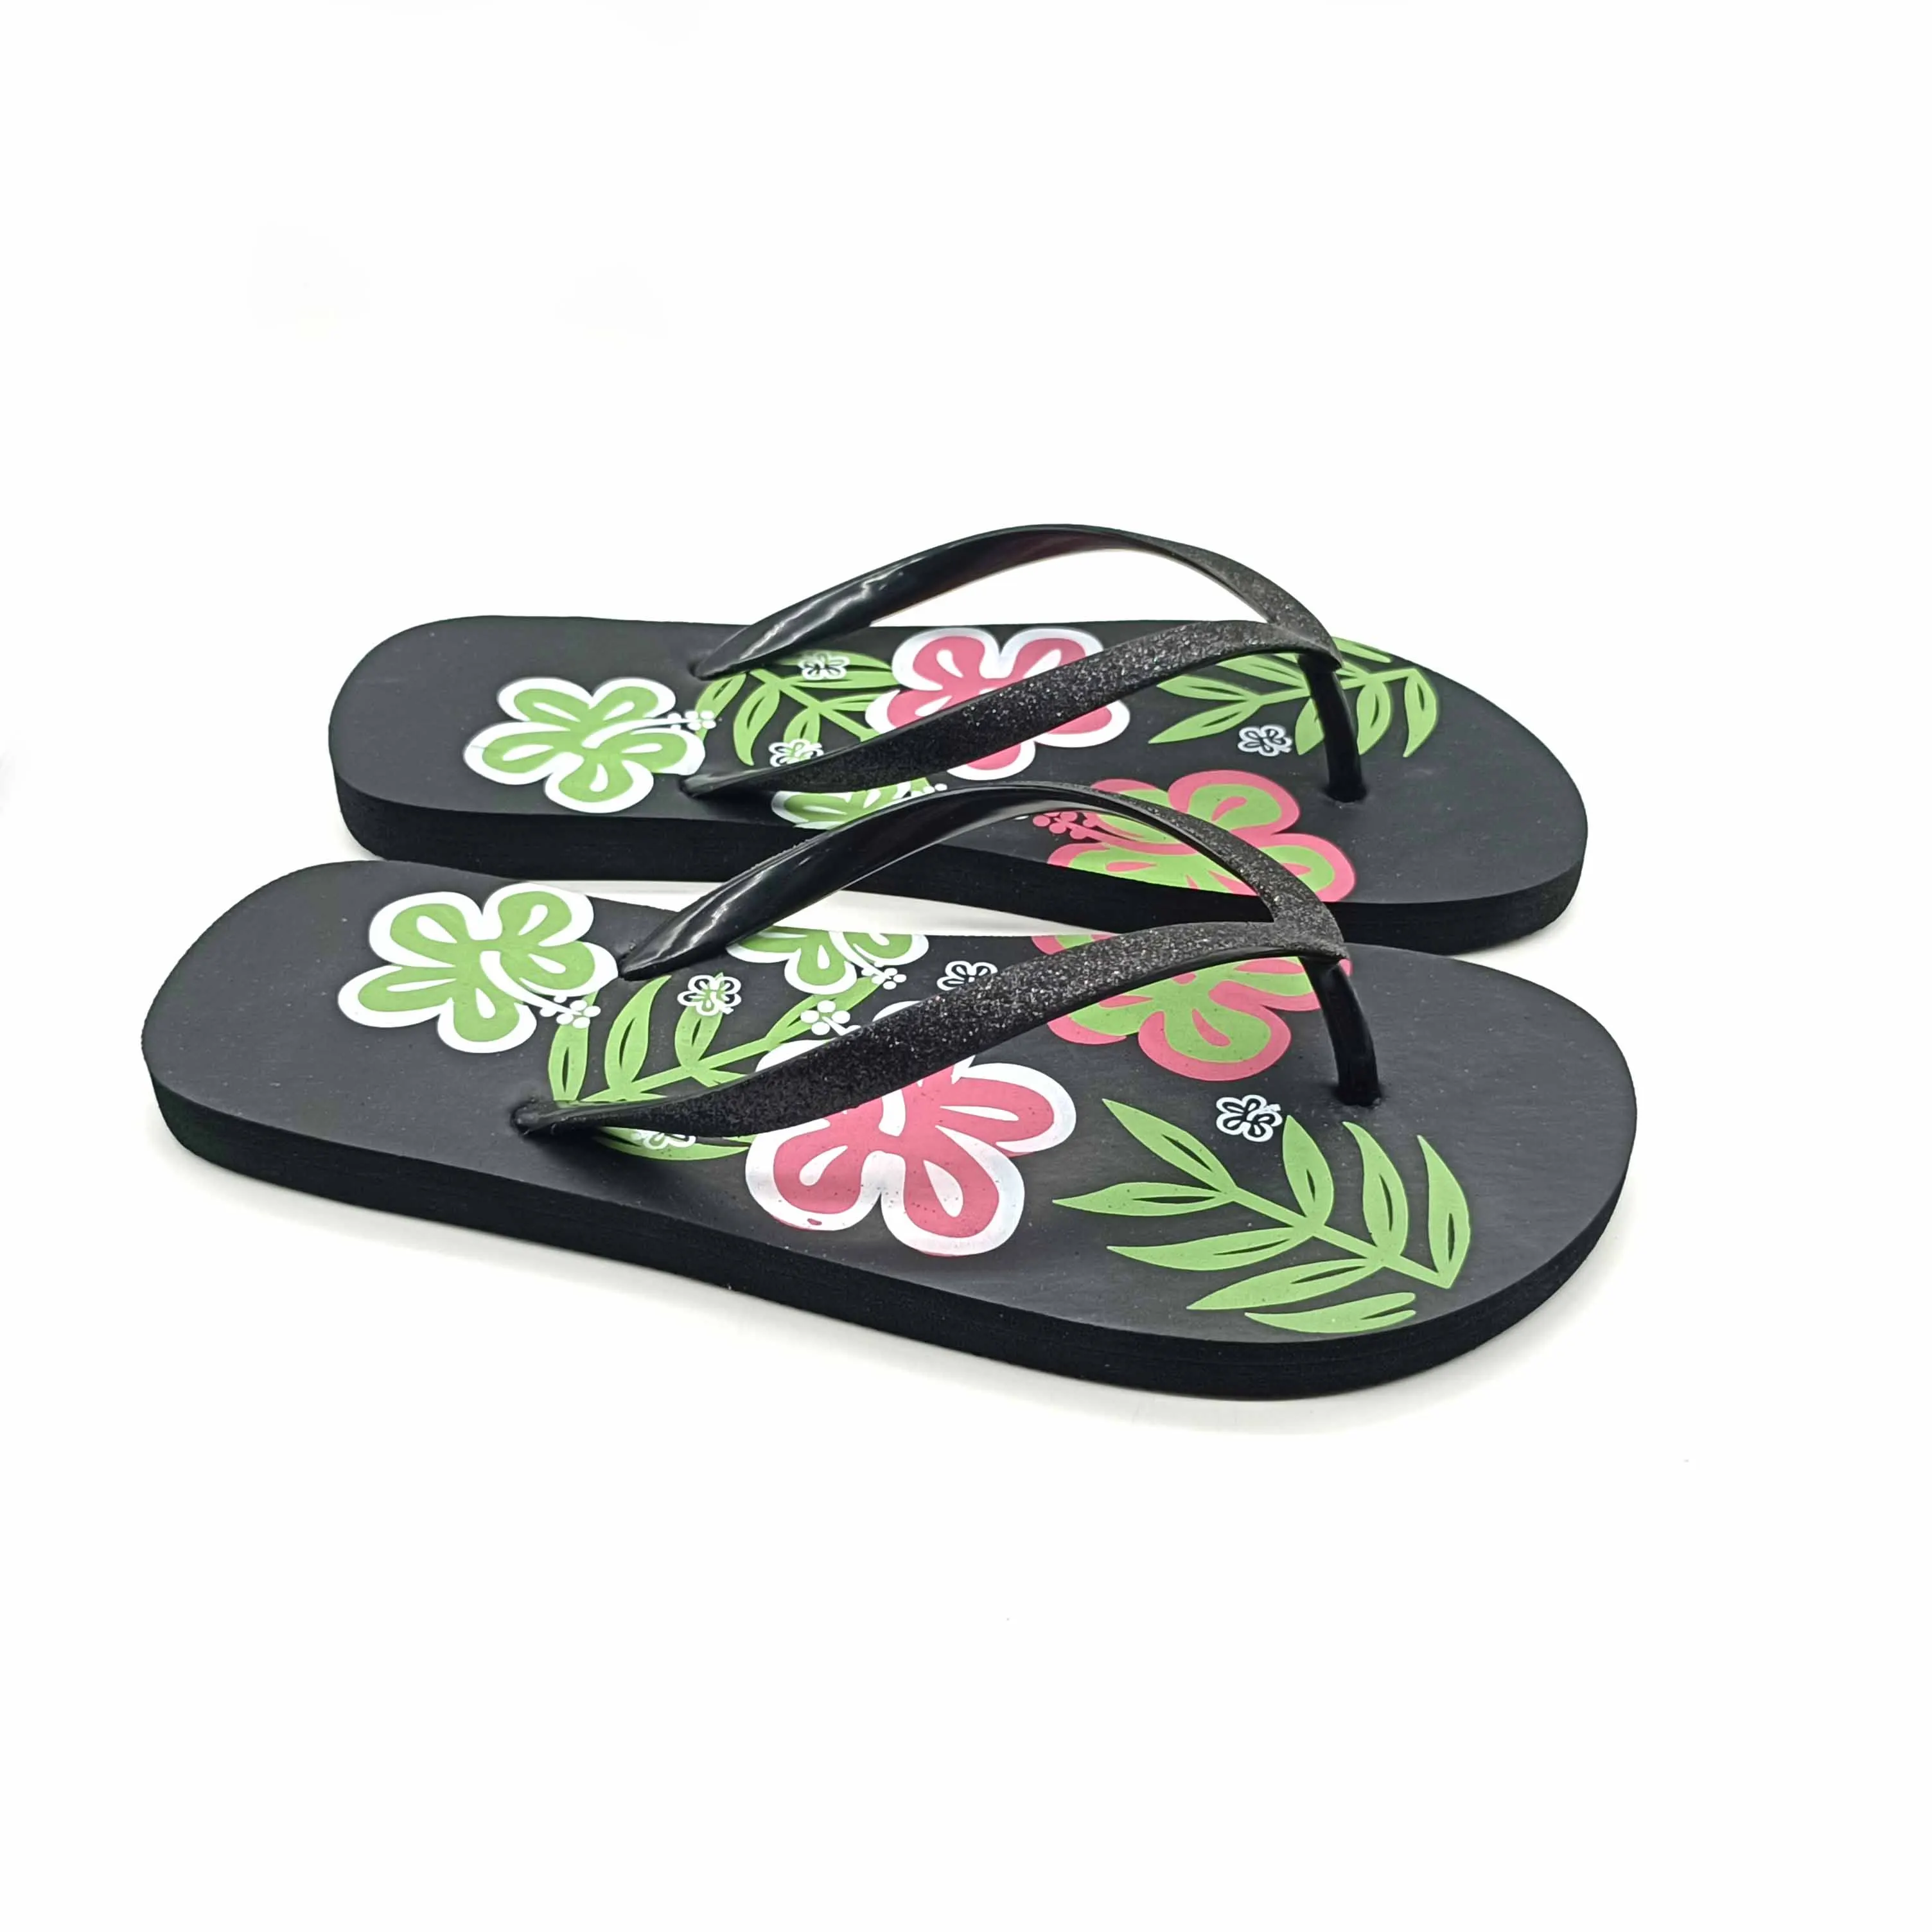 summer latest design women sandals stylish| Alibaba.com